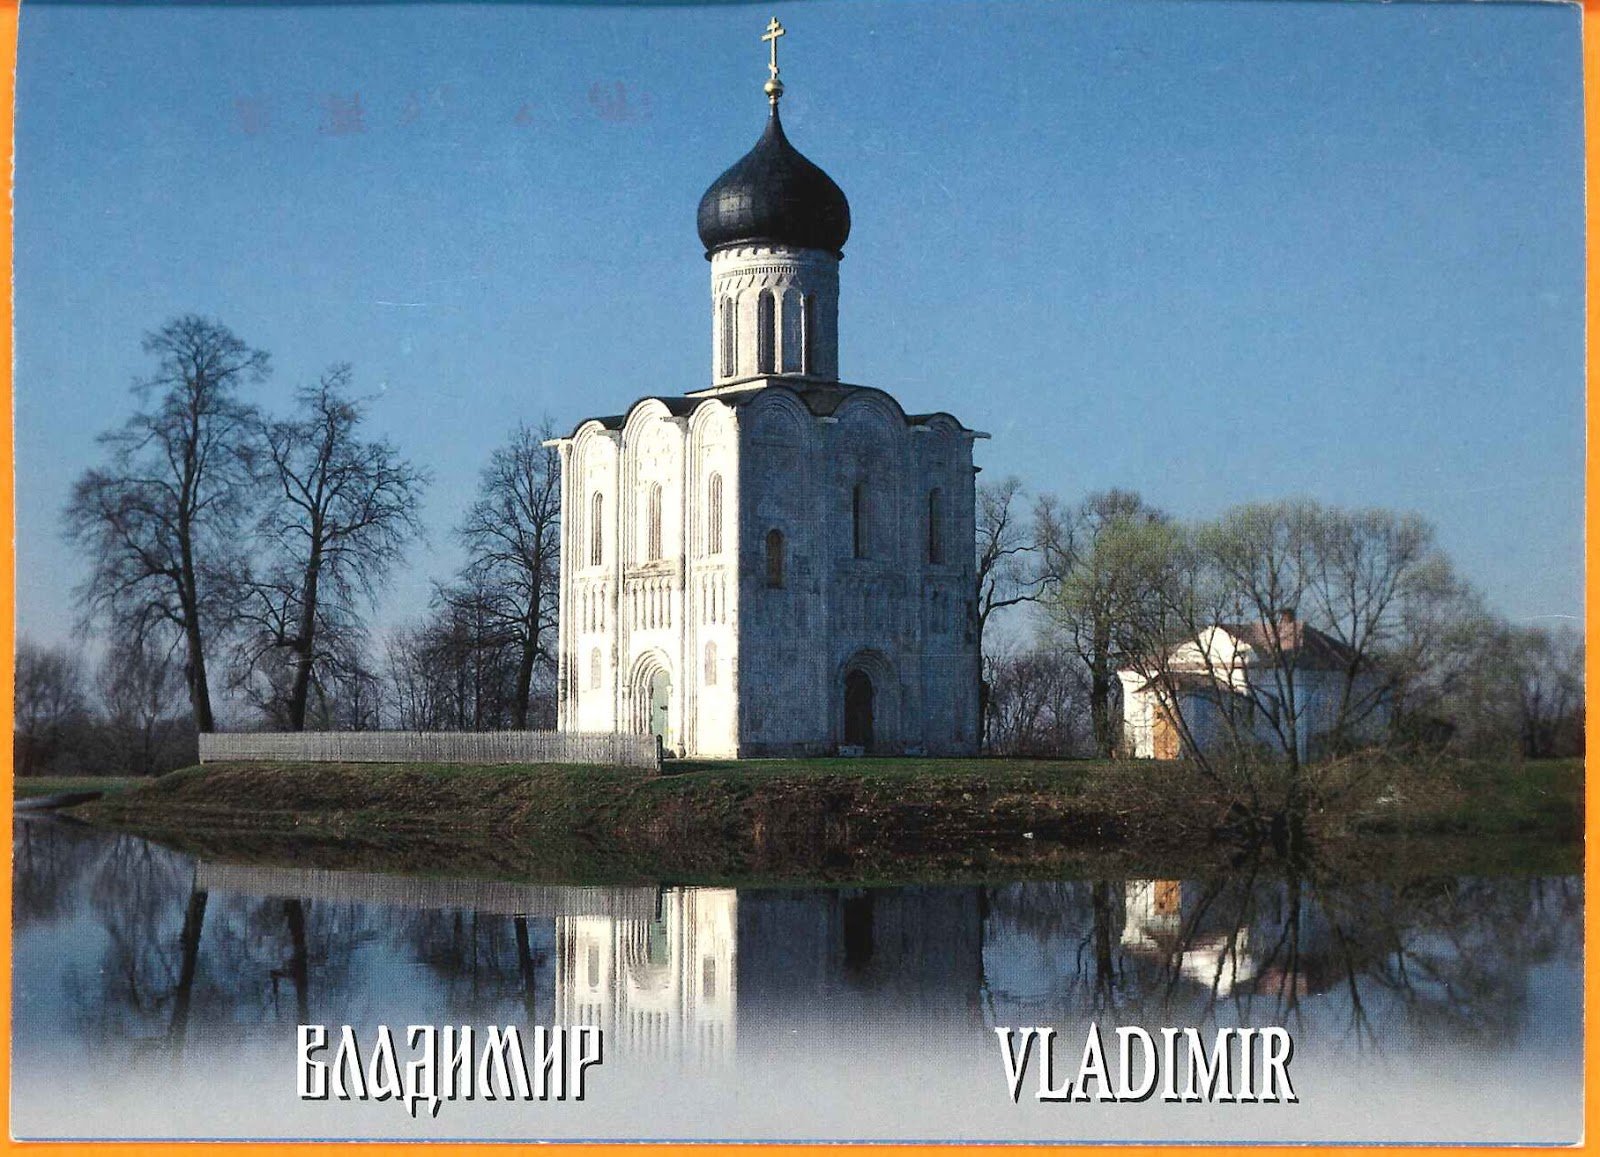 White Monuments of Vladimir and Suzdal the Kiev Prince Vladimir ответы